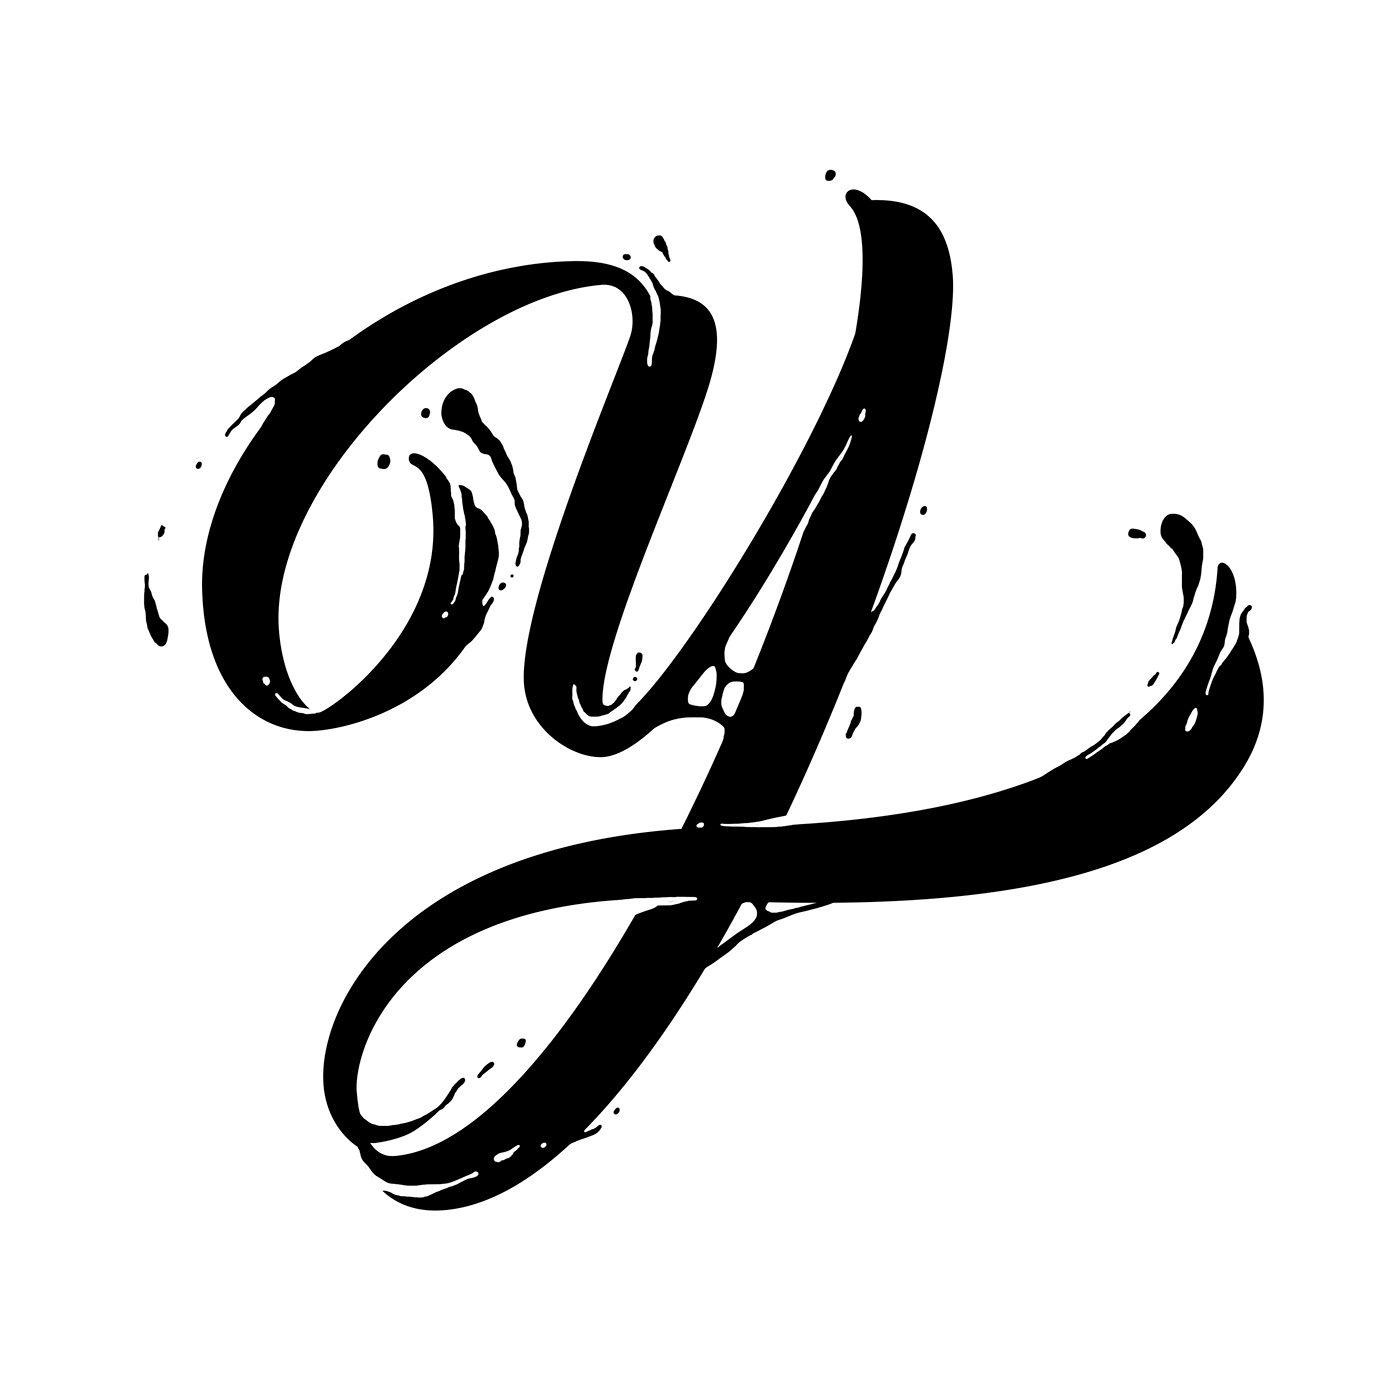 36daysoftype tipografia caligrafia lettering brush Blackletter gif blackandwhite